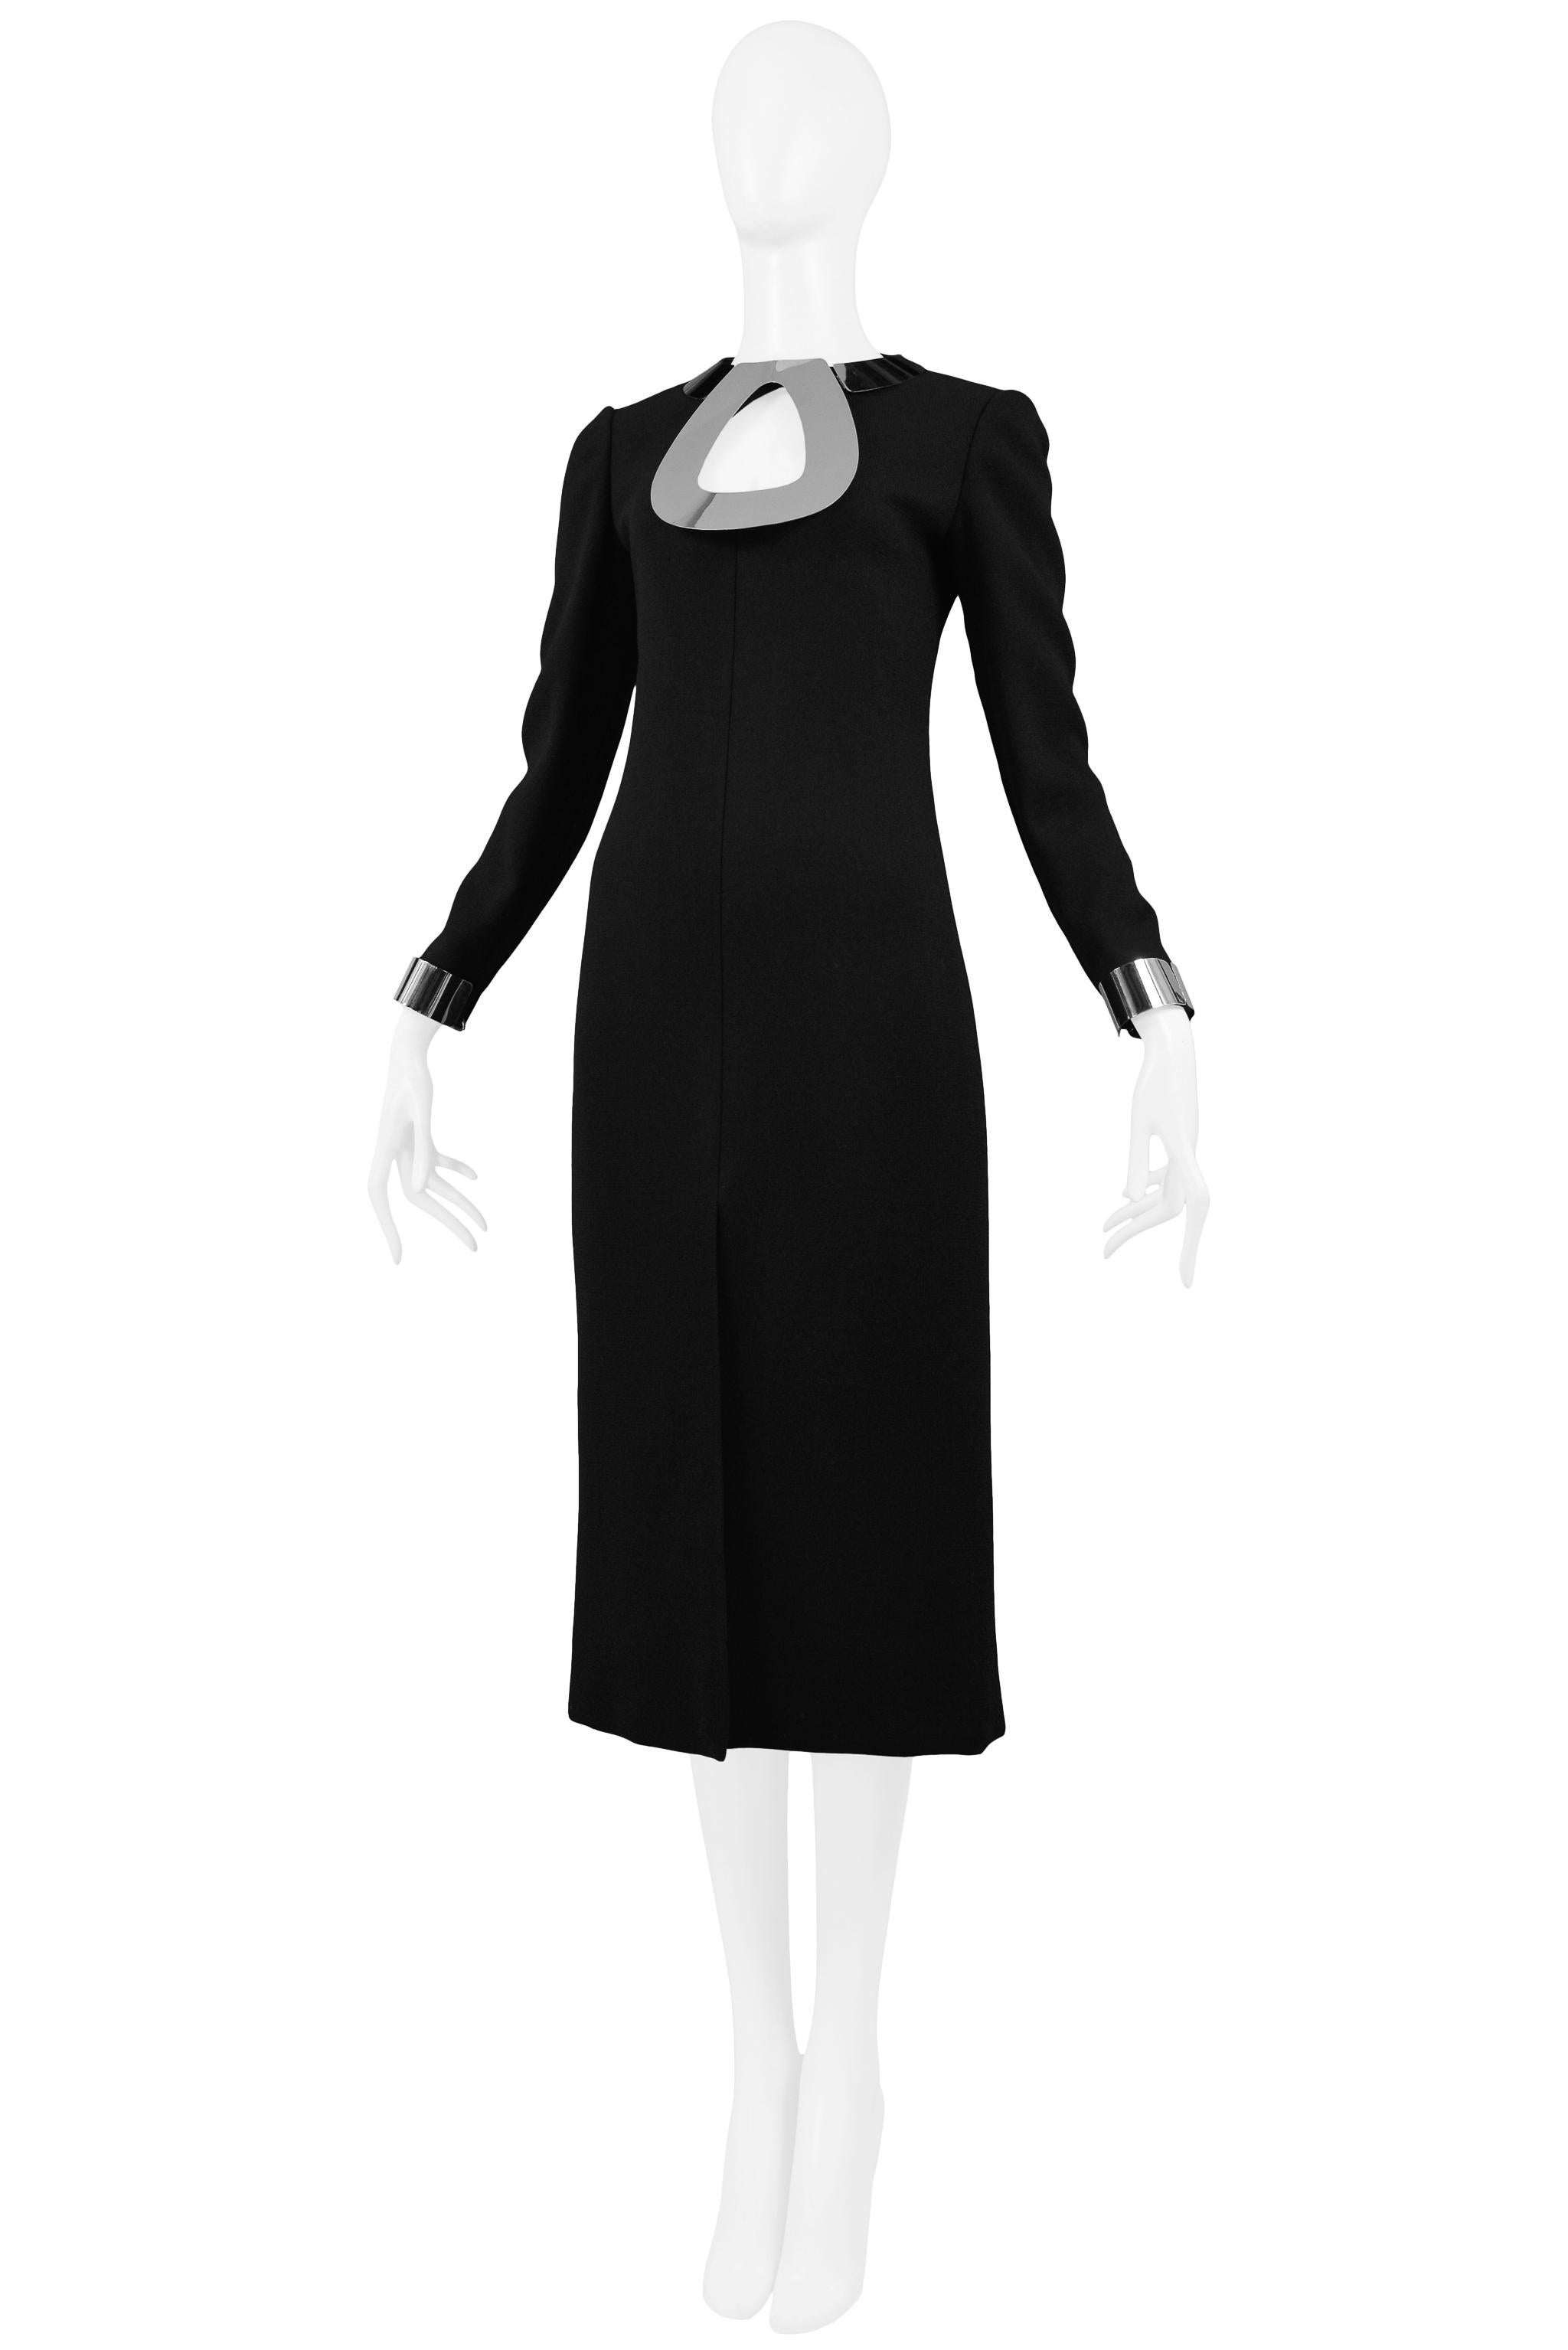 Black Vintage Pierre Cardin Chrome Metal Necklace Dress with Metal Cuffs 1968 For Sale